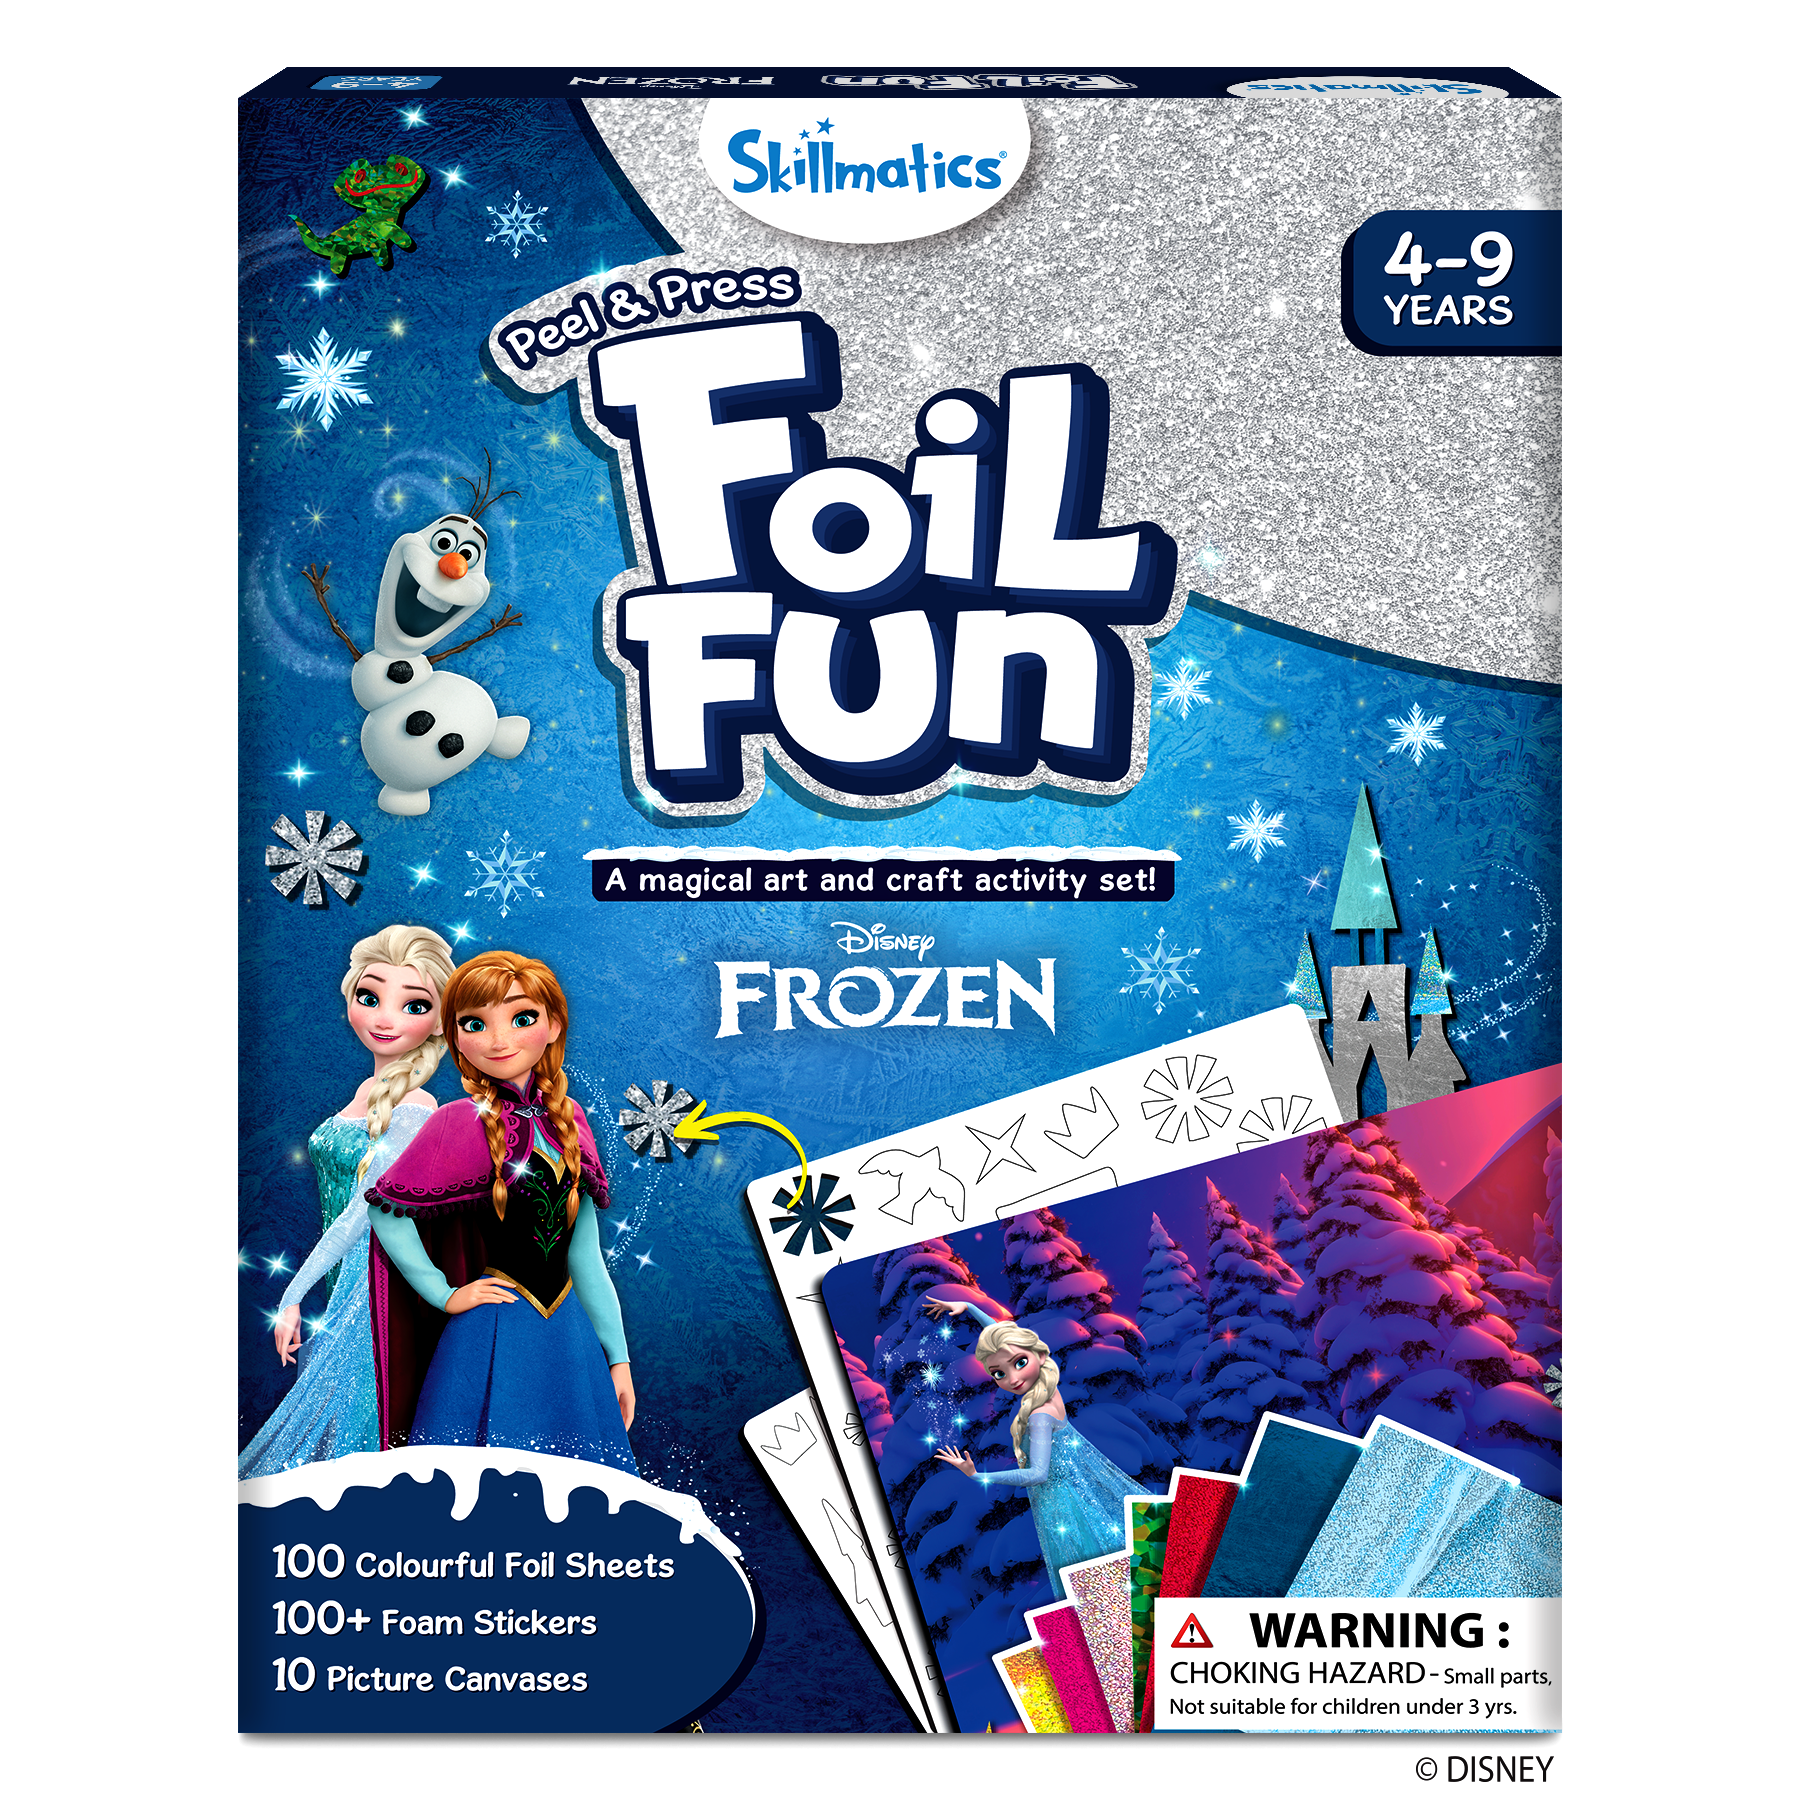 Skillmatics Art & Craft Activity - Foil Fun Disney Frozen, No Mess Art for Kids, Craft Kits, DIY Creative Activity, Gifts for Girls & Boys Ages 4, 5, 6, 7, 8, 9